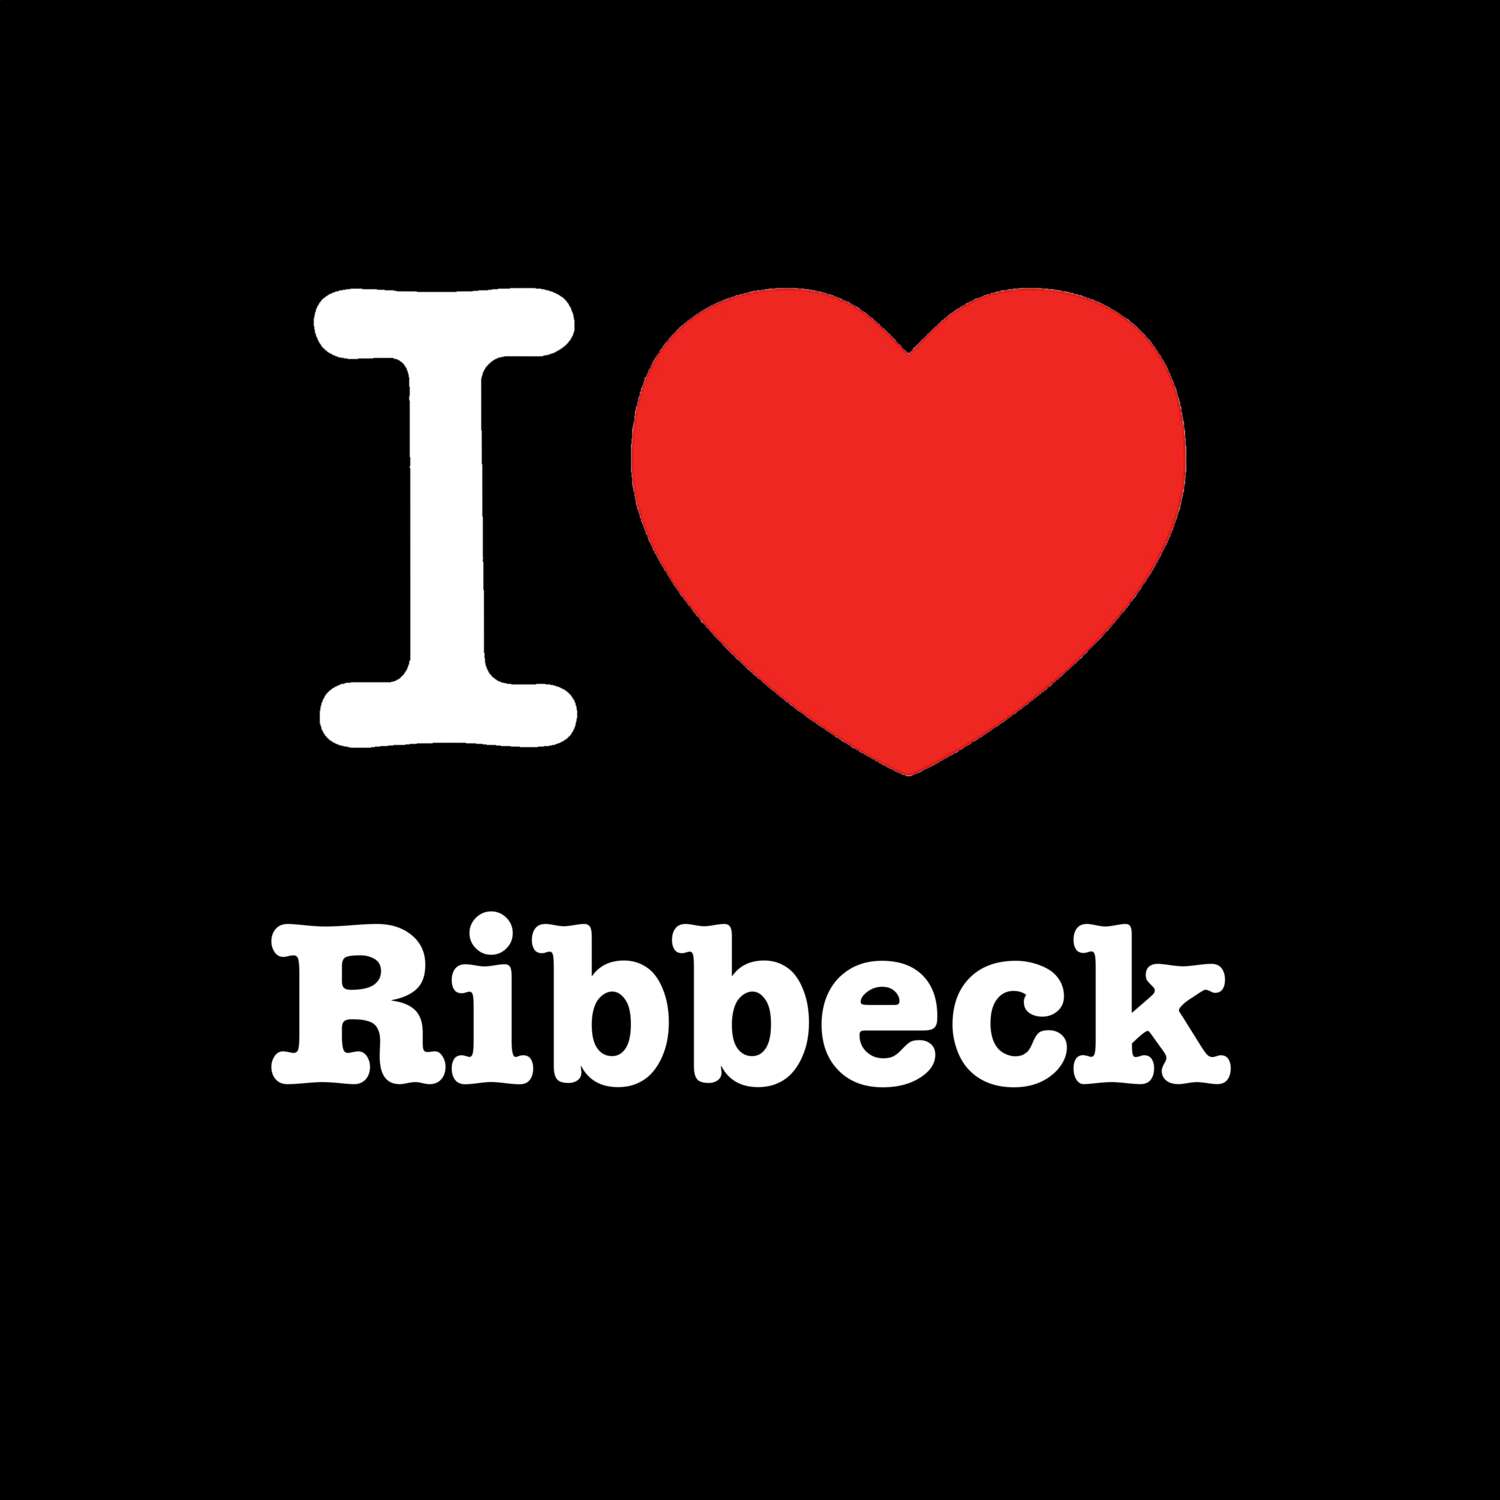 Ribbeck T-Shirt »I love«